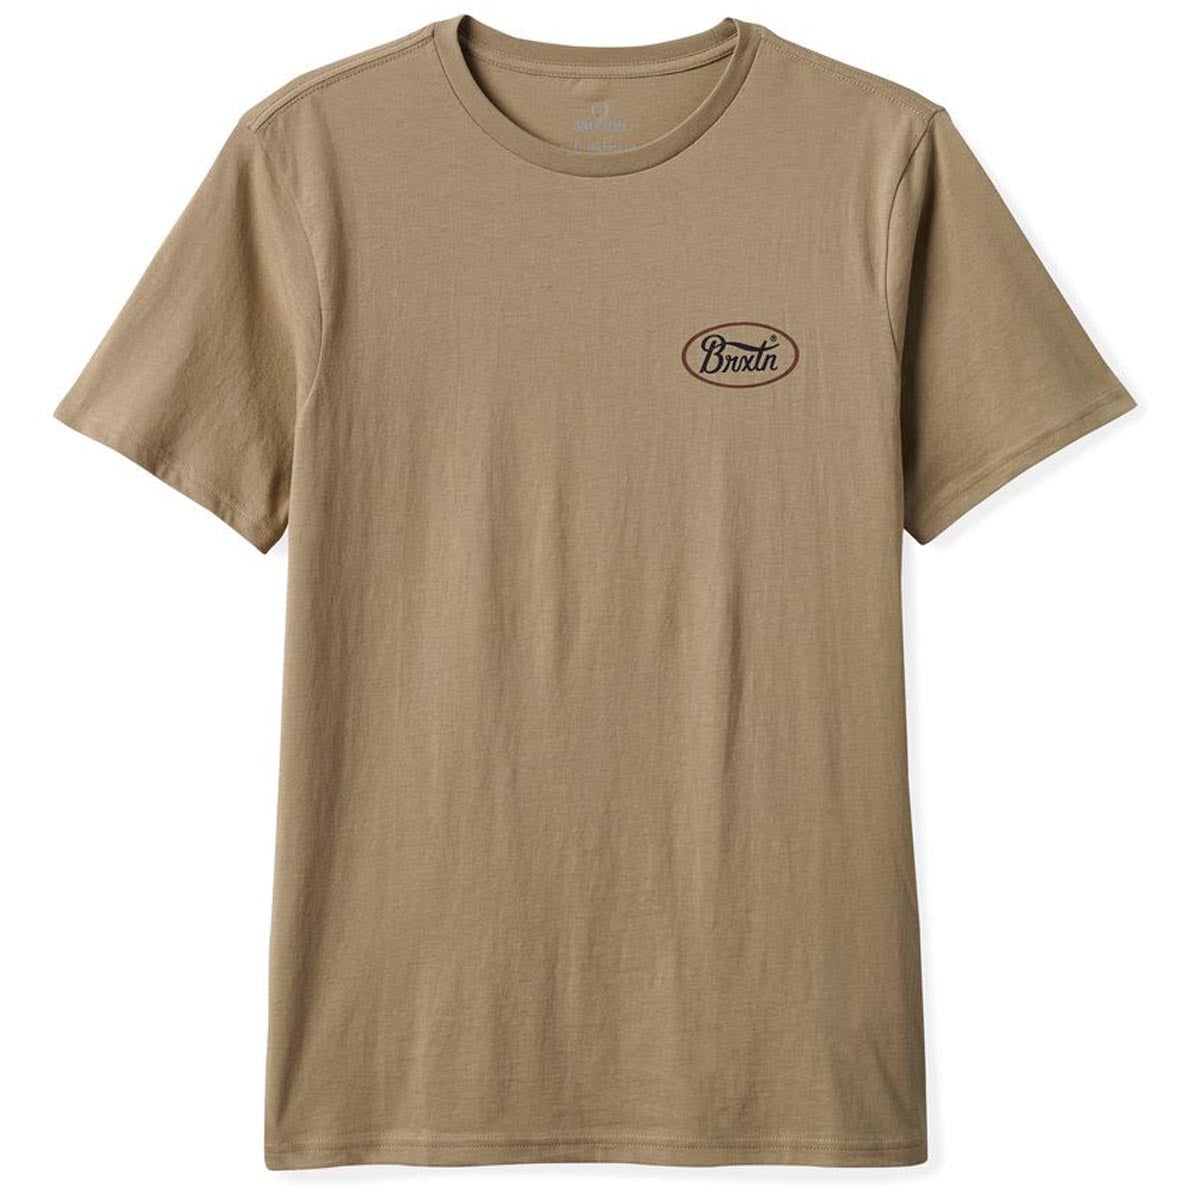 Brixton Parsons T-Shirt - Oatmeal/Washed Navy/Sepia image 1